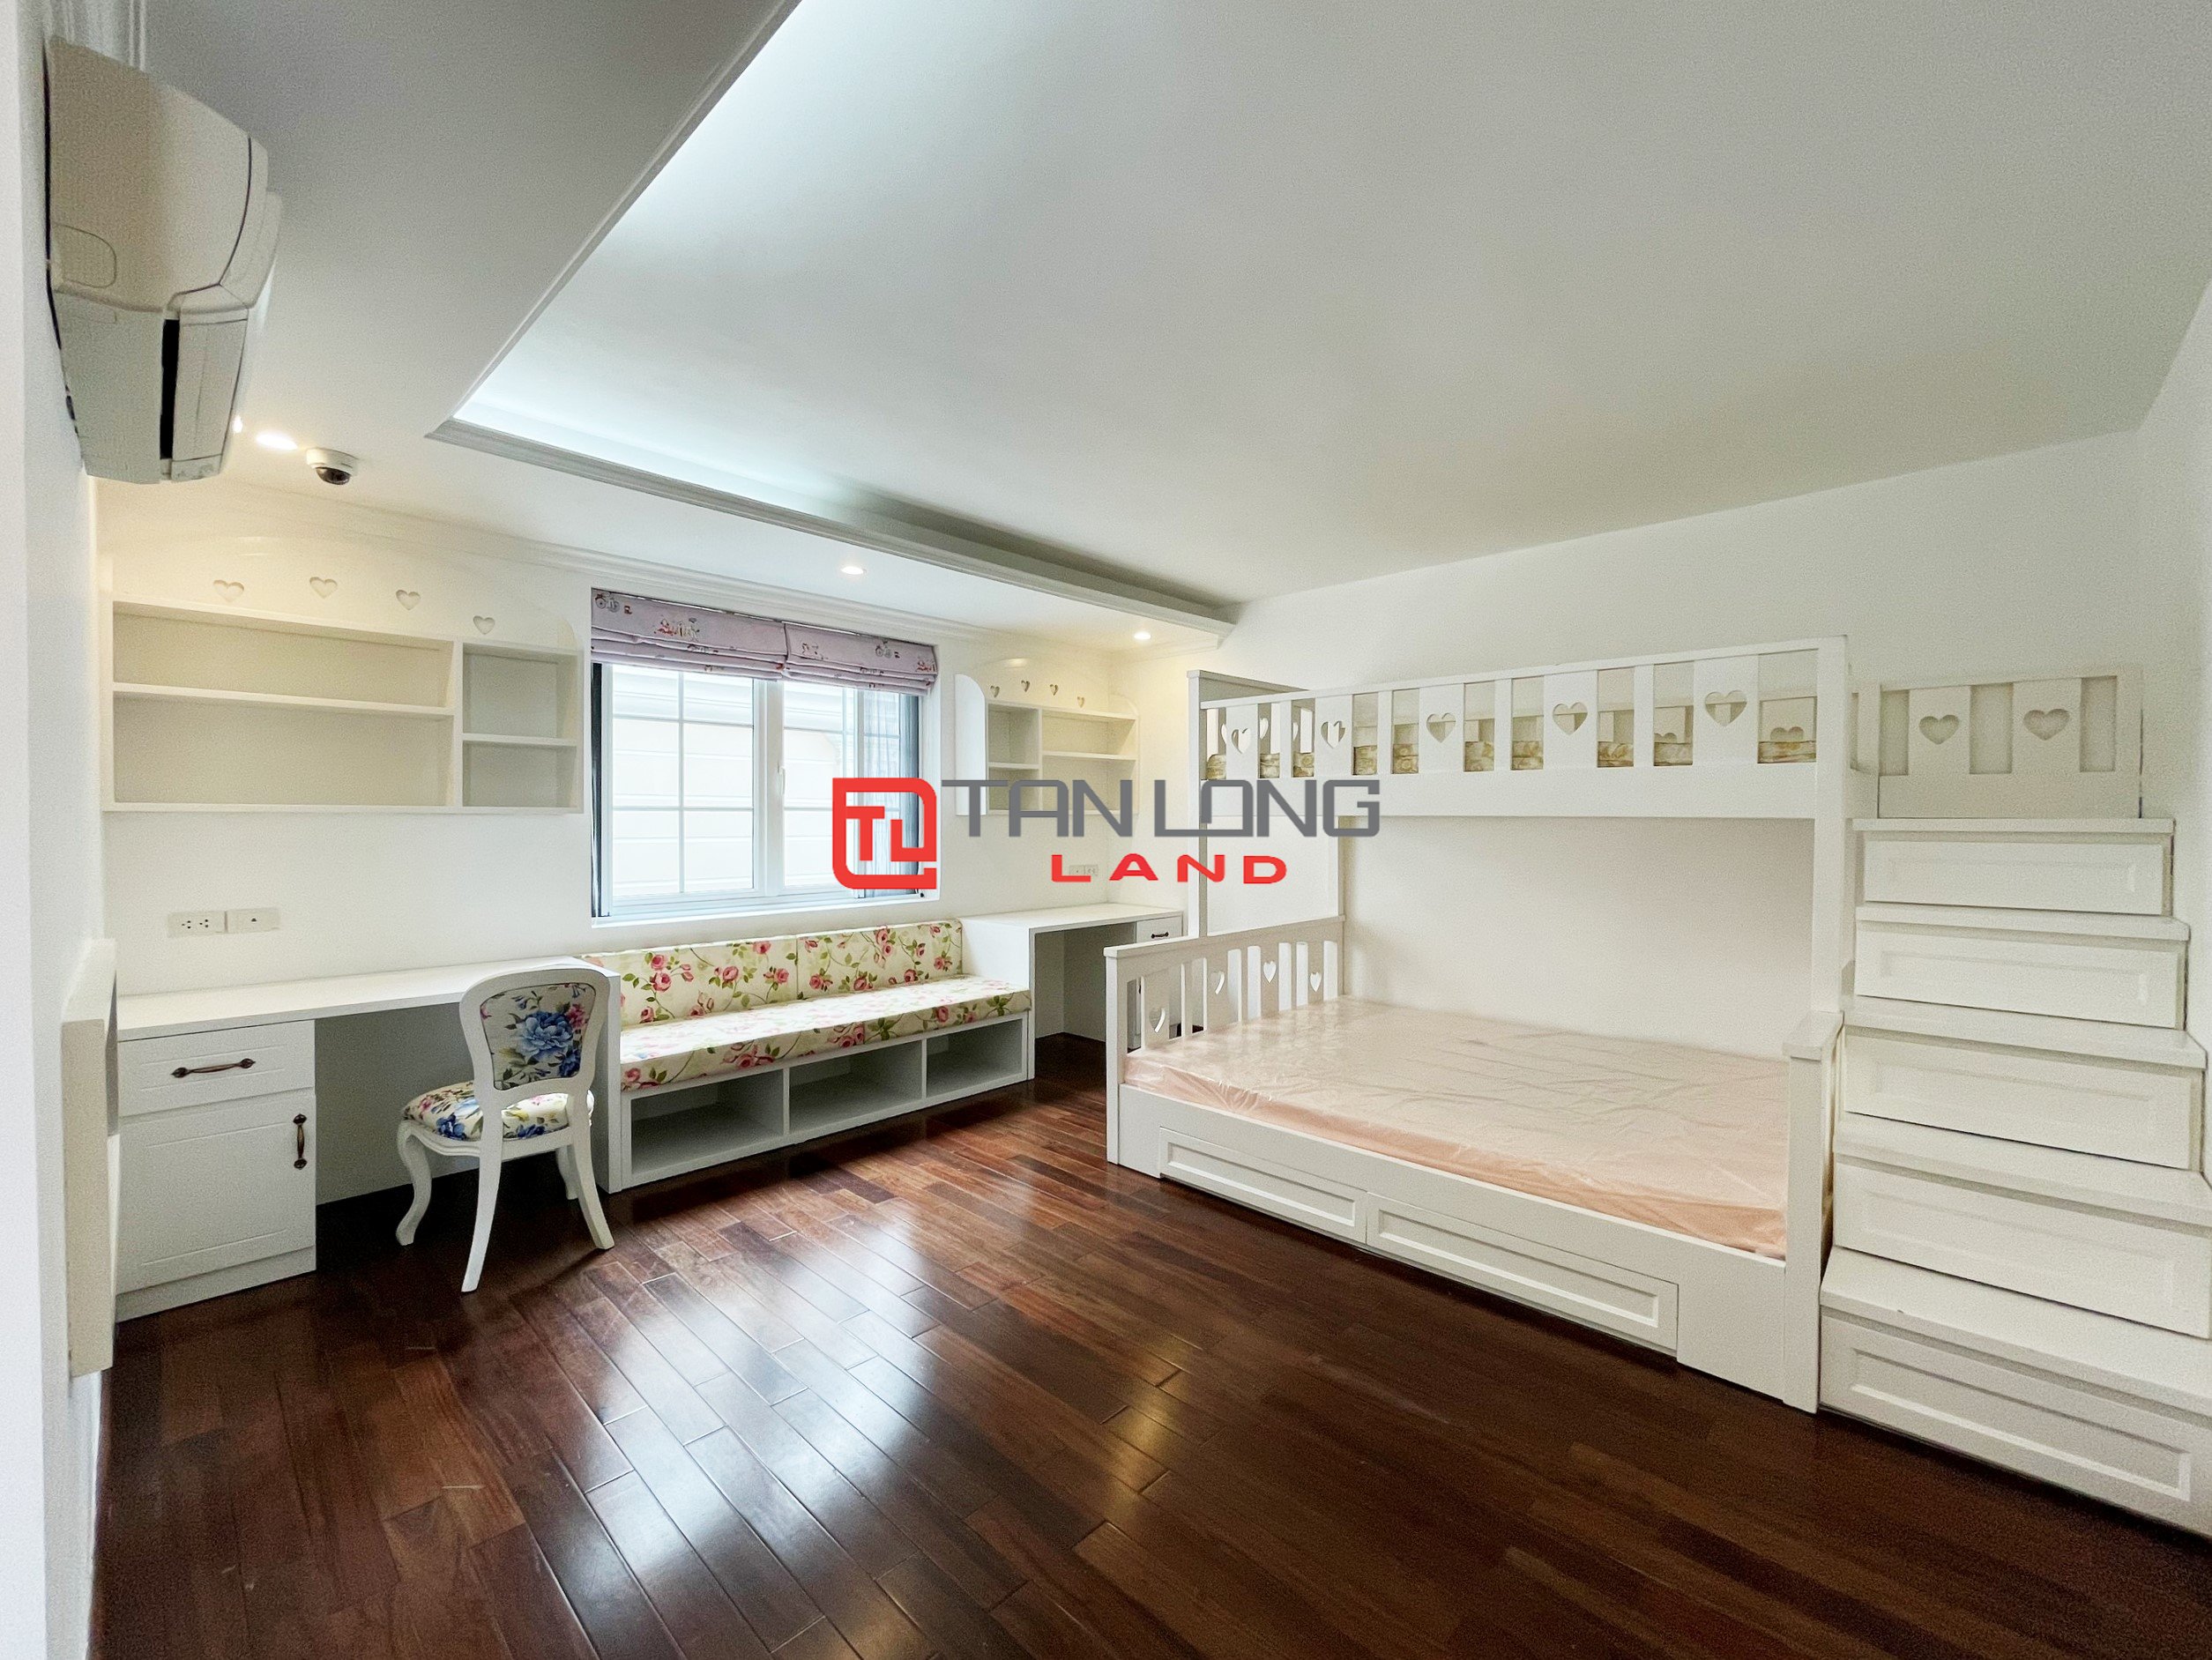 Full Furniture Villa for rent with 4 Bedrooms in Vinhomes Riverside Long Bien 16